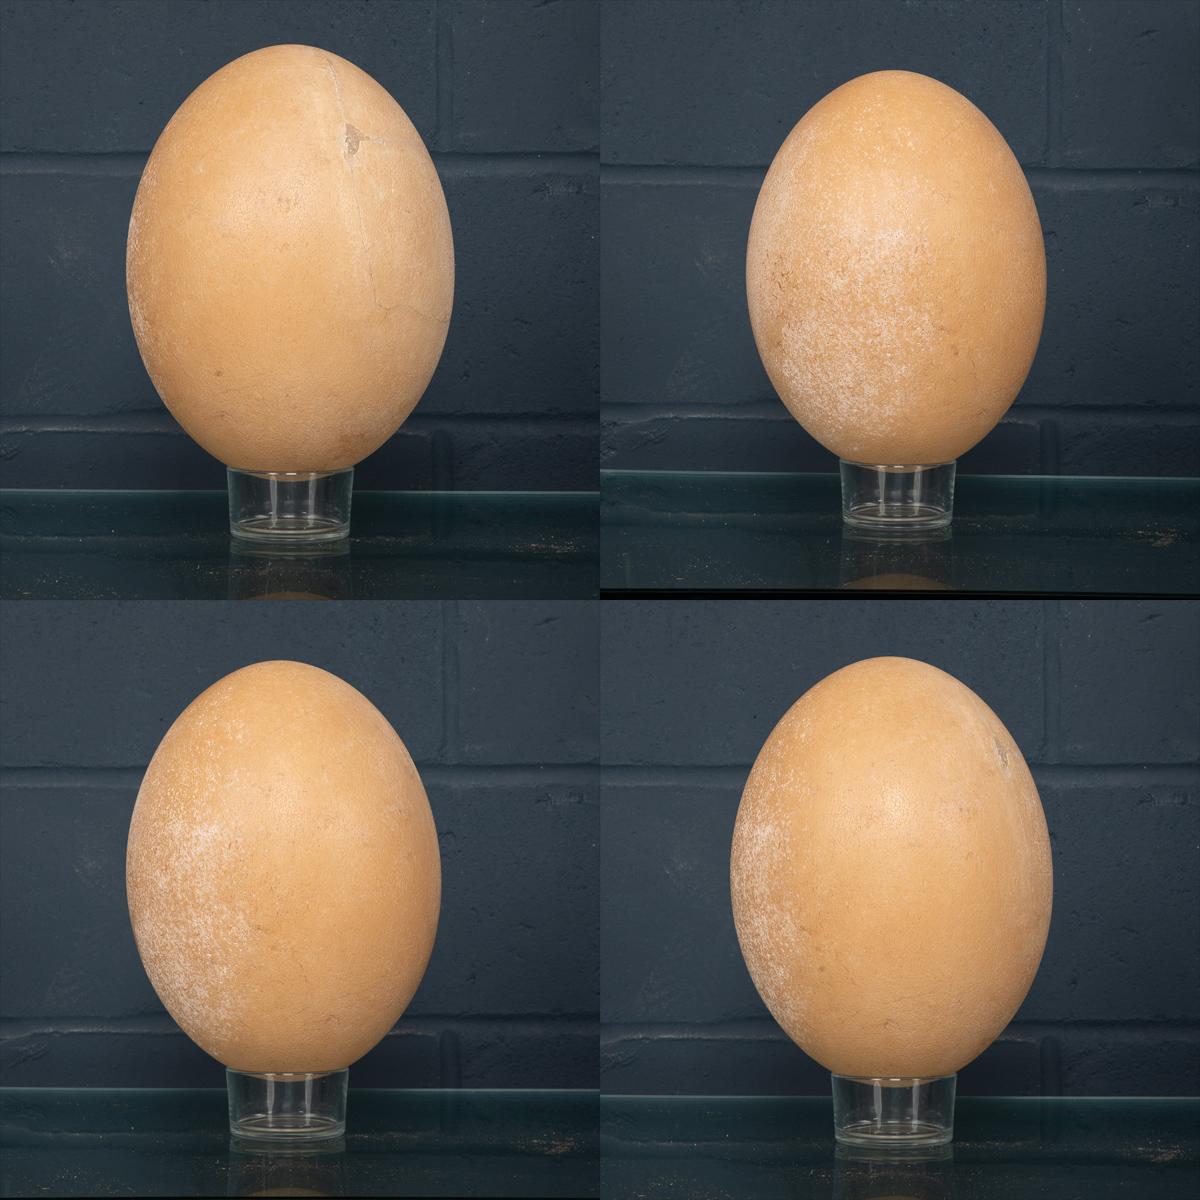 bird egg comparison